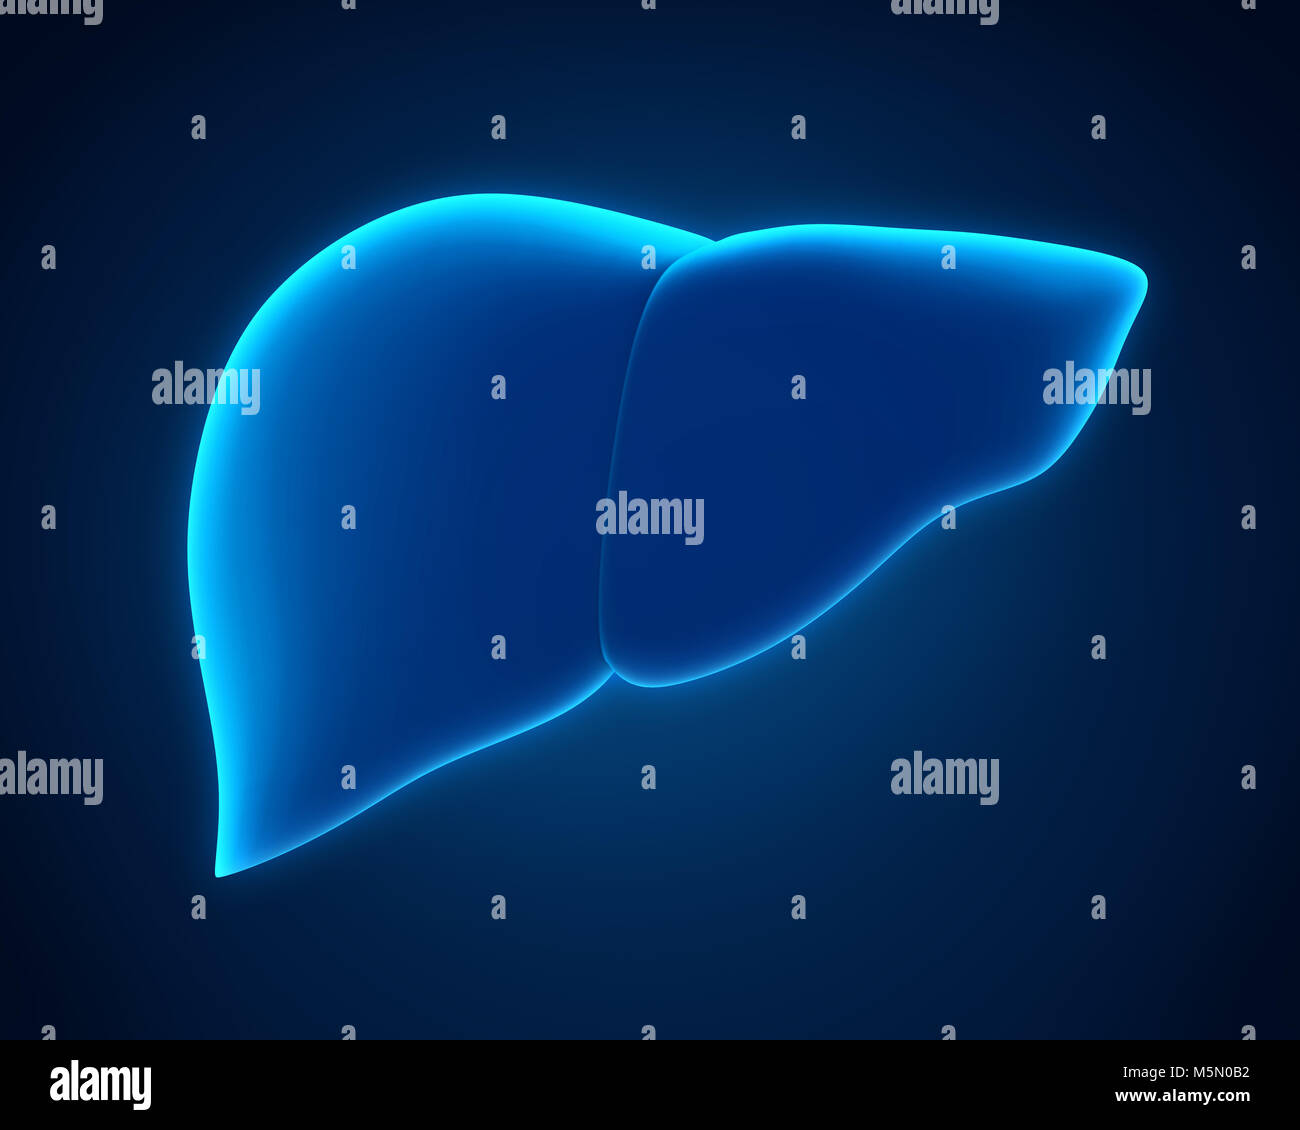 Human Liver Anatomy Stock Photo